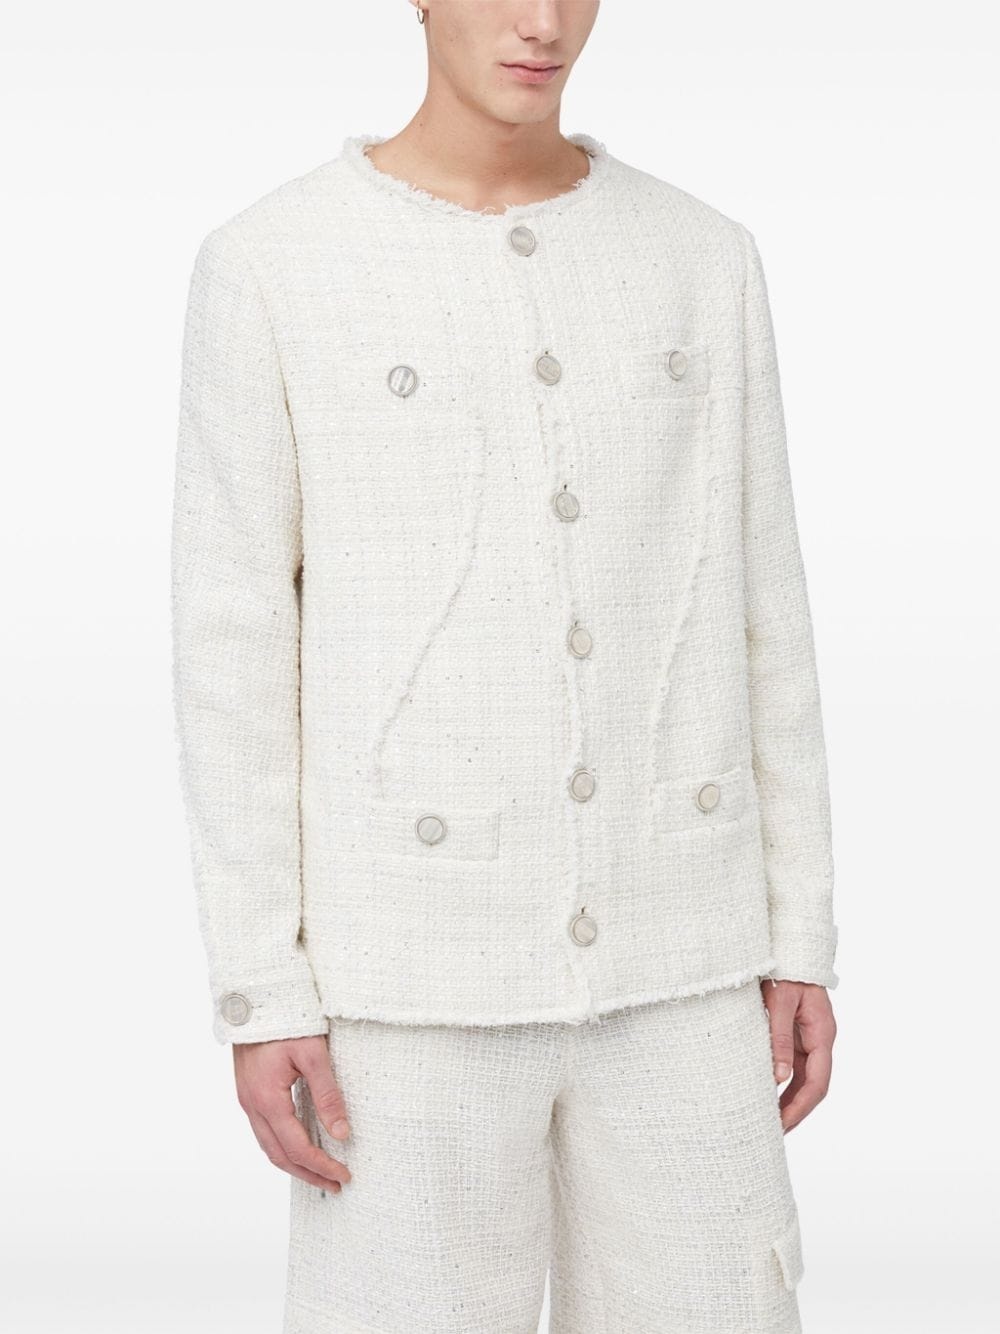 sequin-embellished tweed jacket - 4